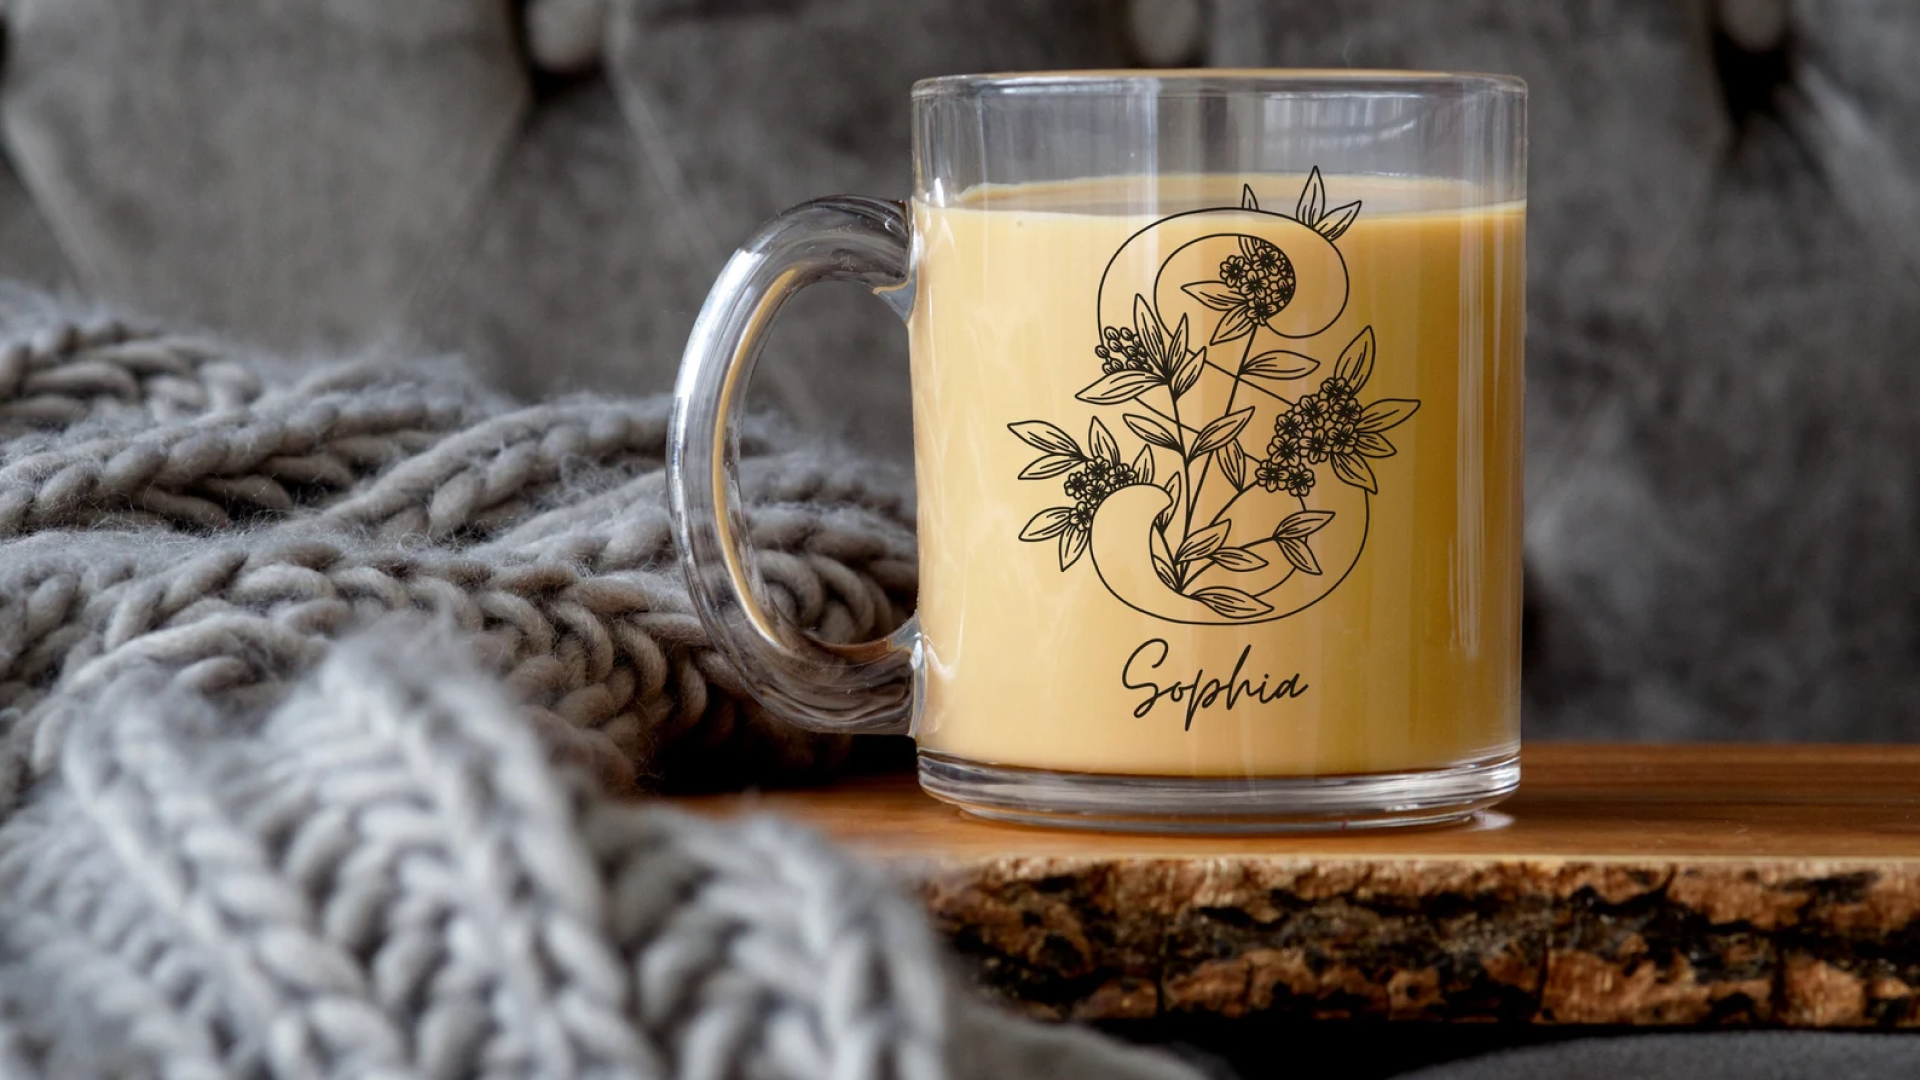 Best Morning Ever Coffee Mug - These Unique Large Warming Mugs